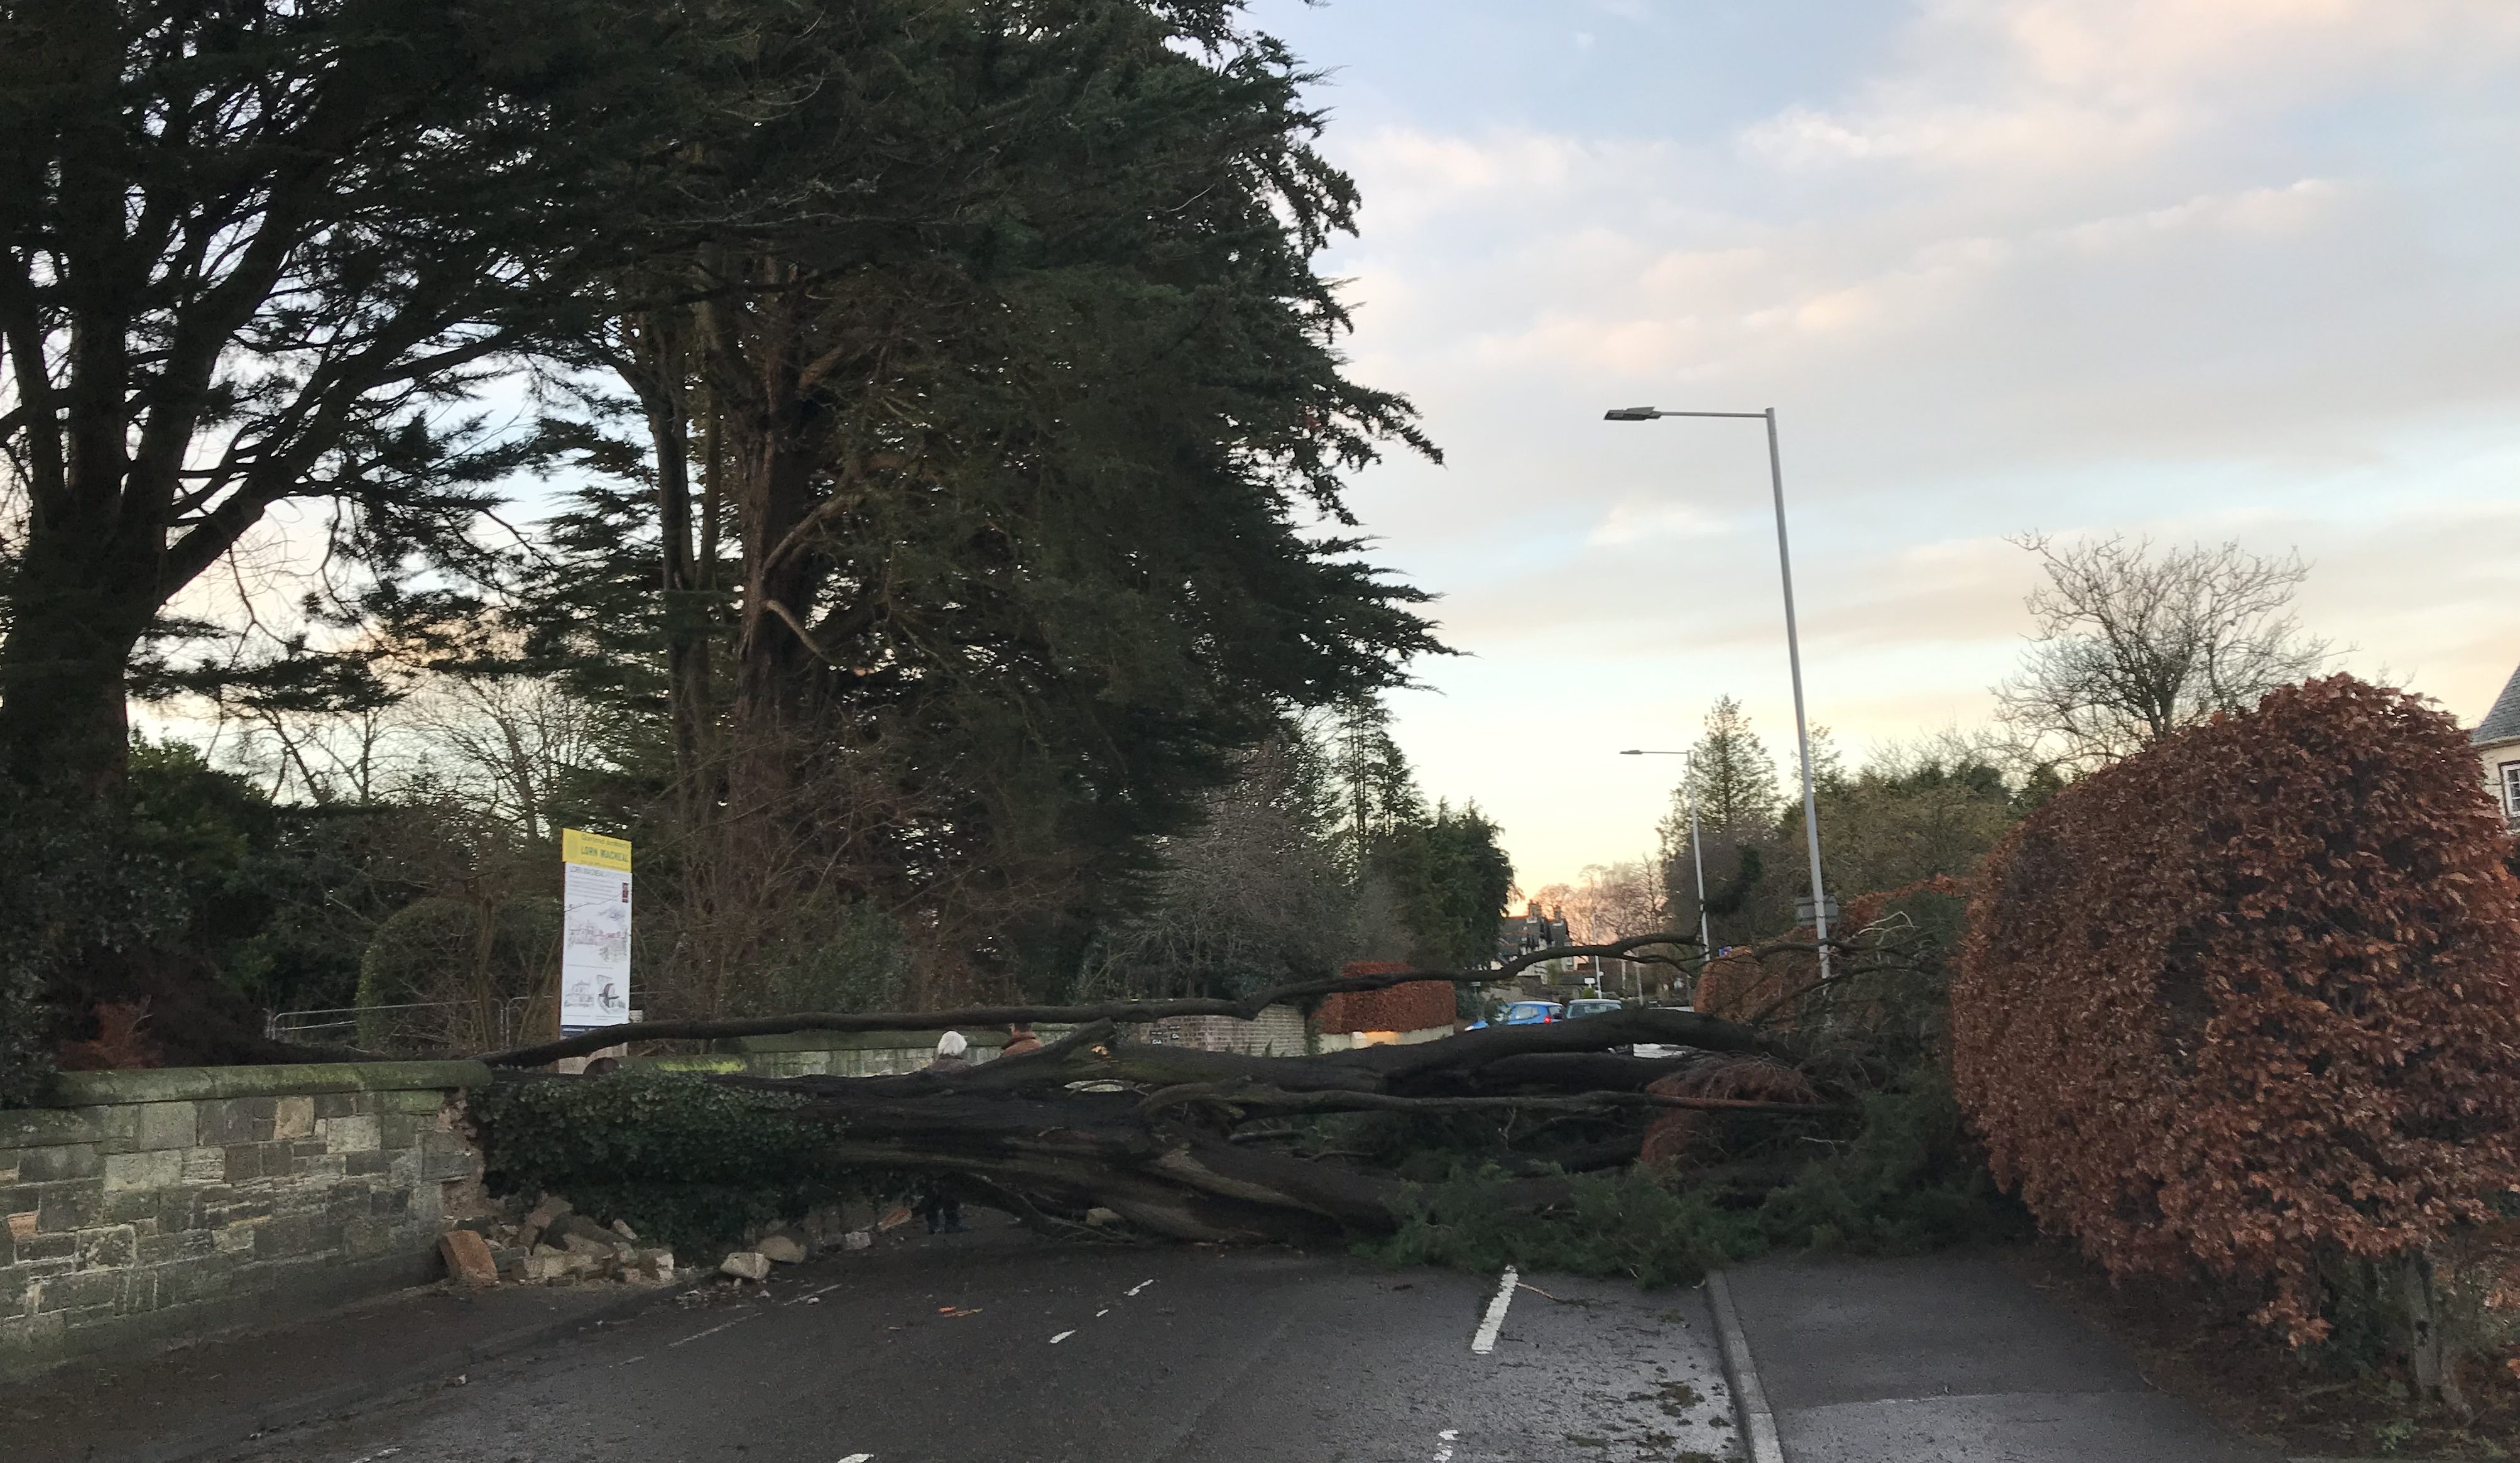 the tree has block the road